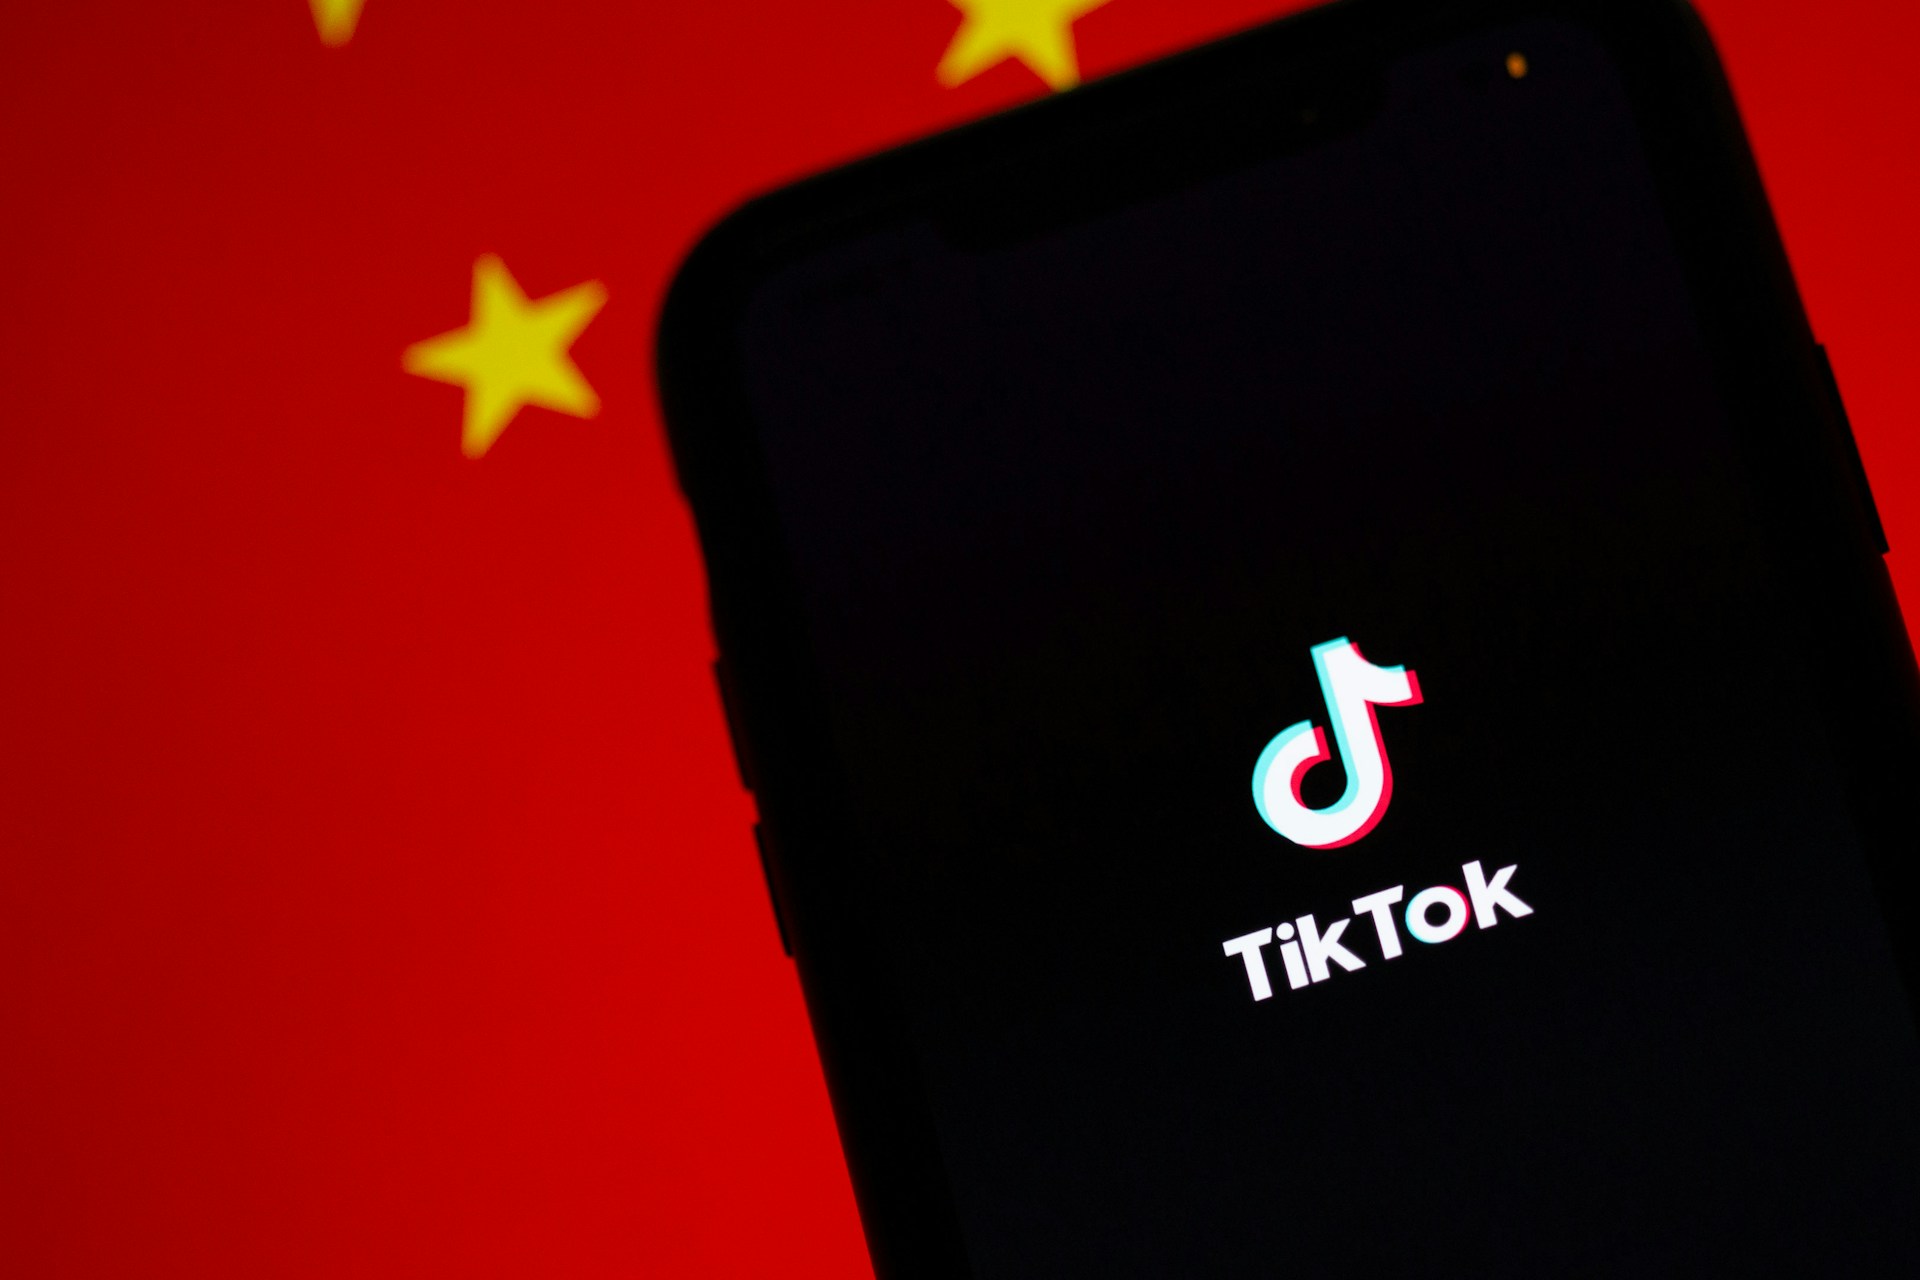 TikTok is China’s first social media giant.